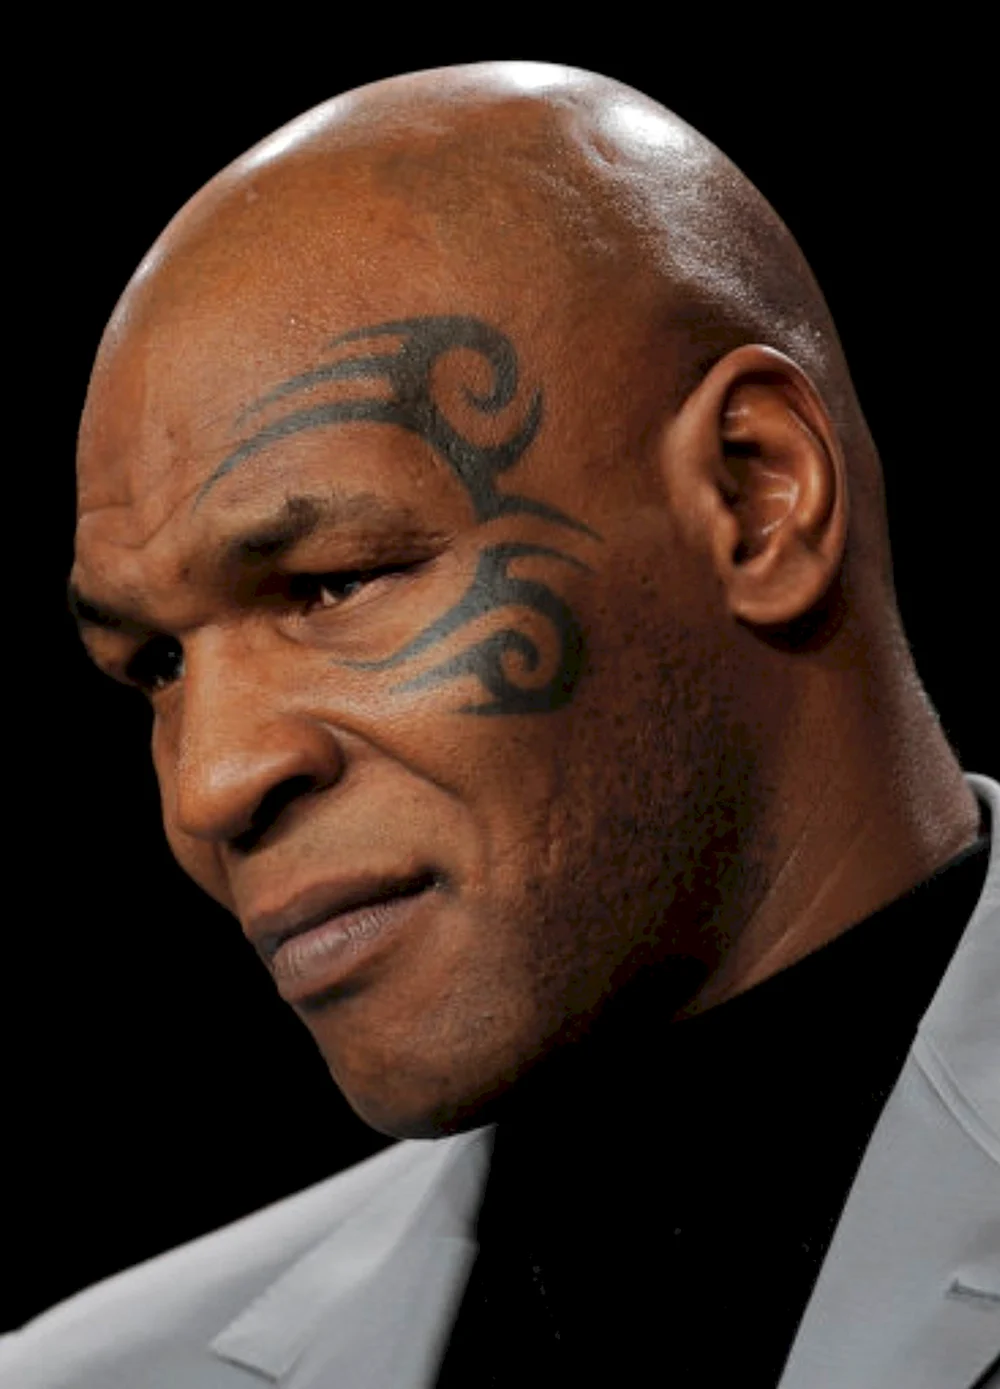 Mike Tyson Tattoo